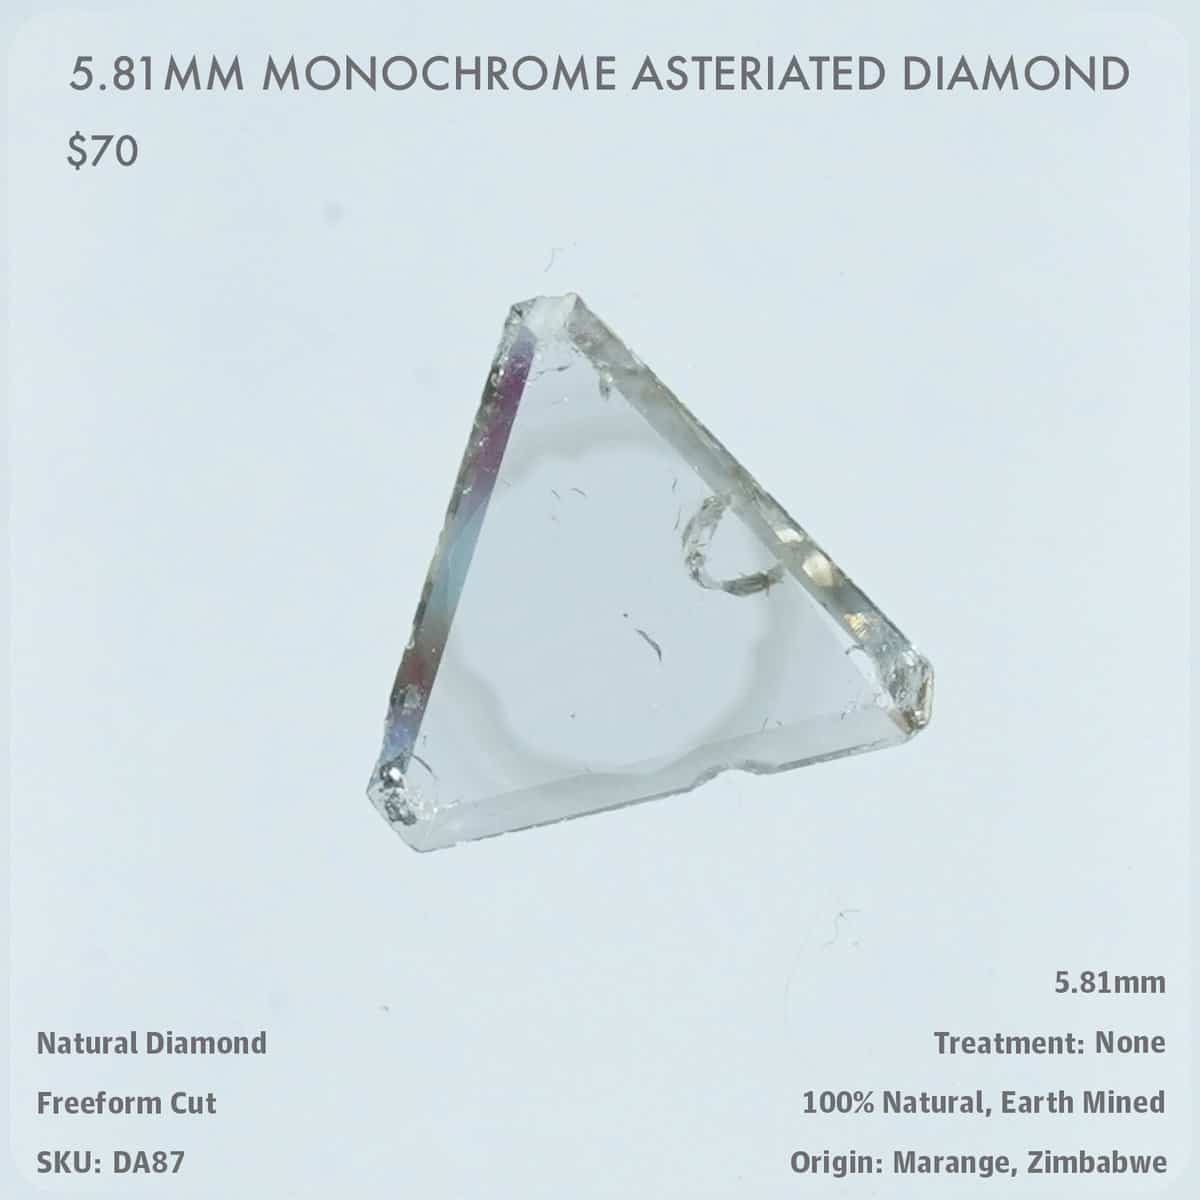 5.81mm Monochrome Asteriated Diamond